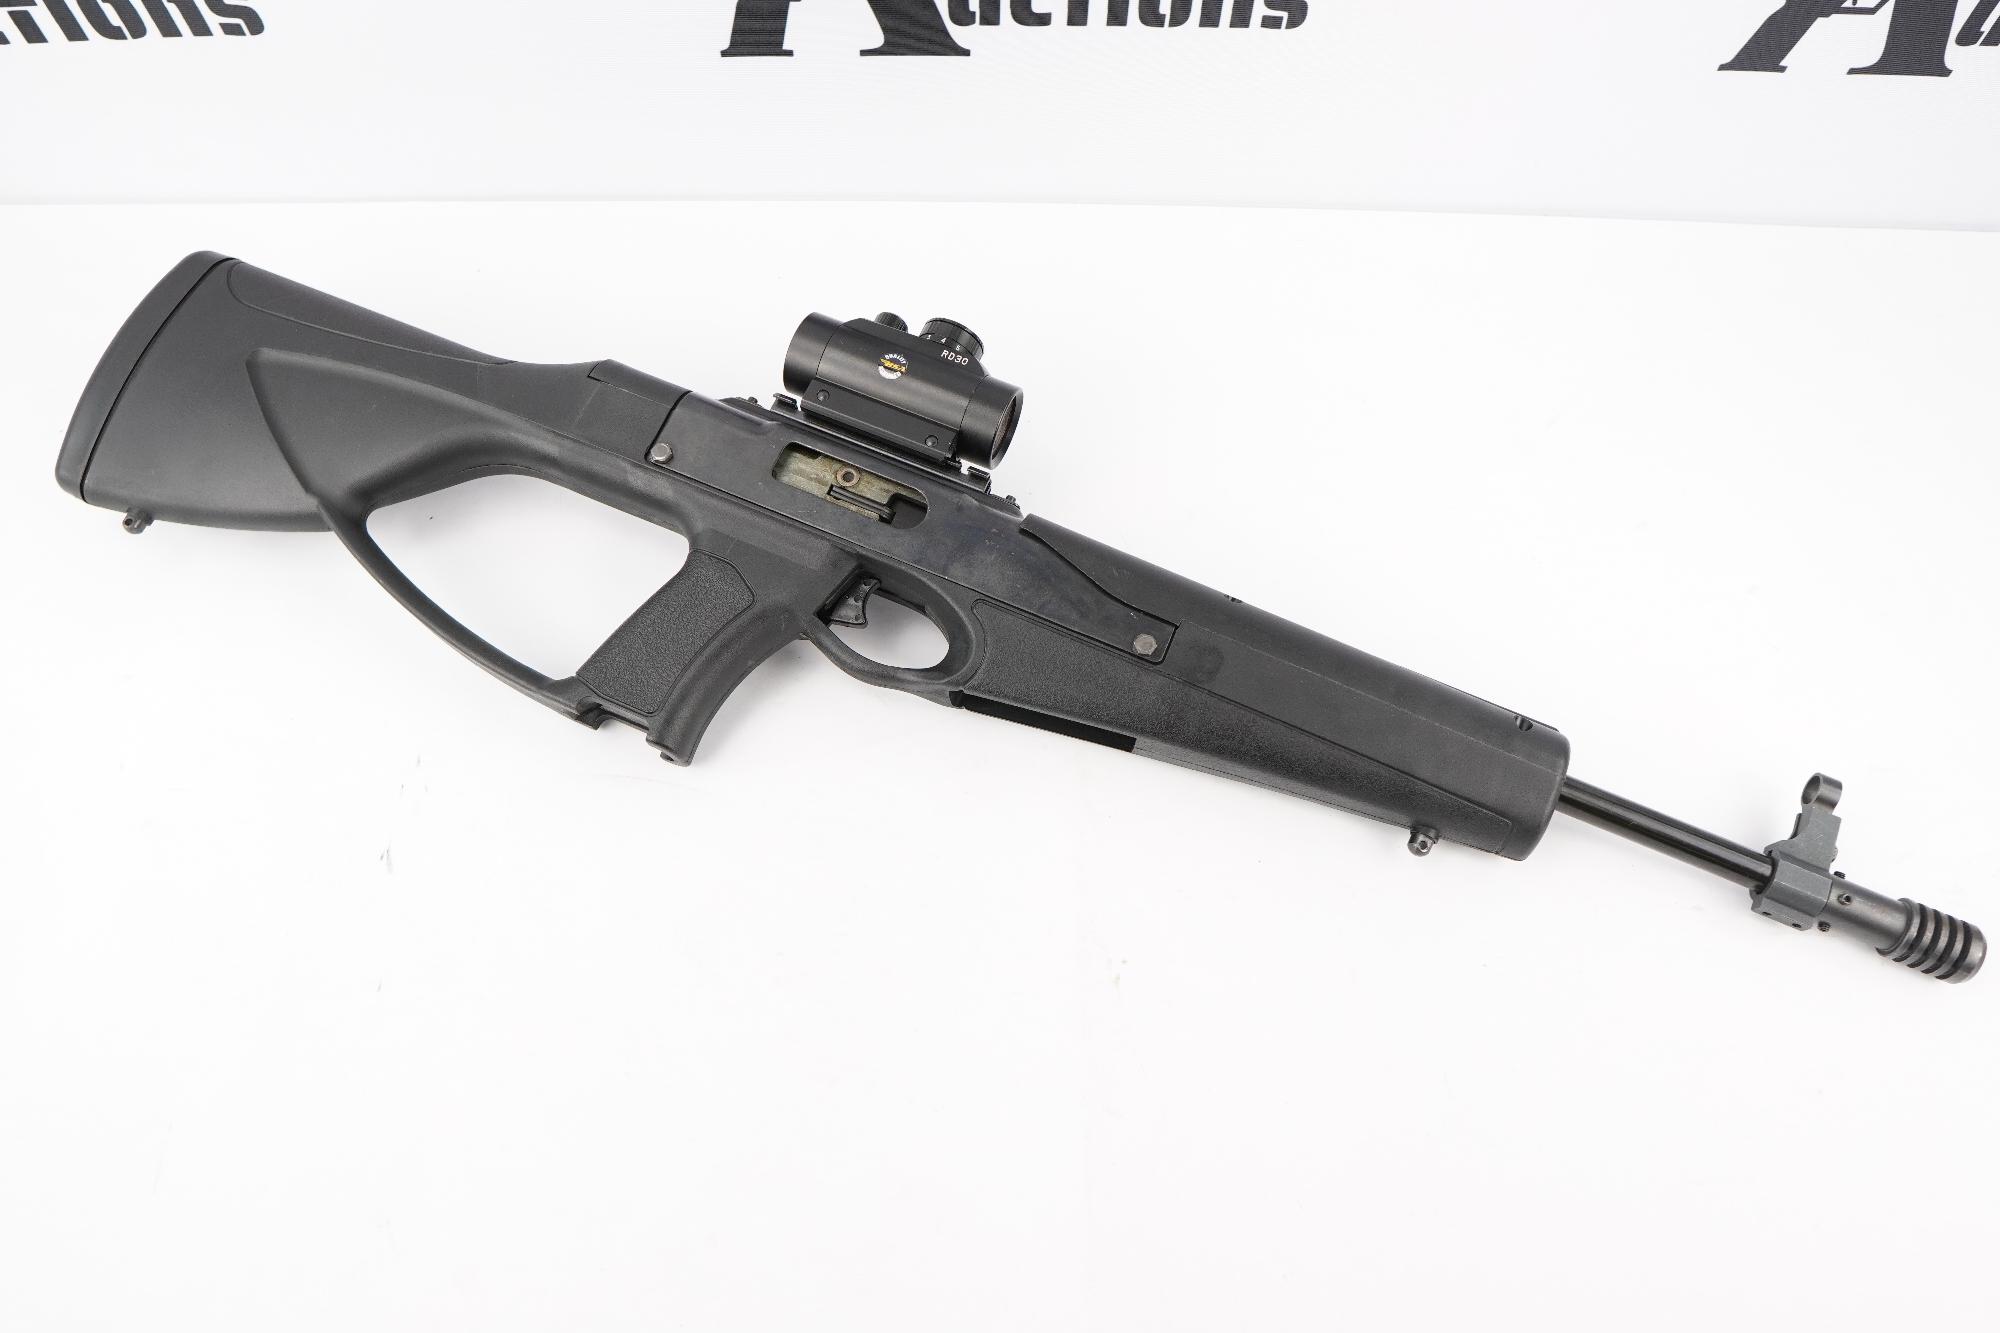 HI-POINT FIREARMS 995 9mmx19